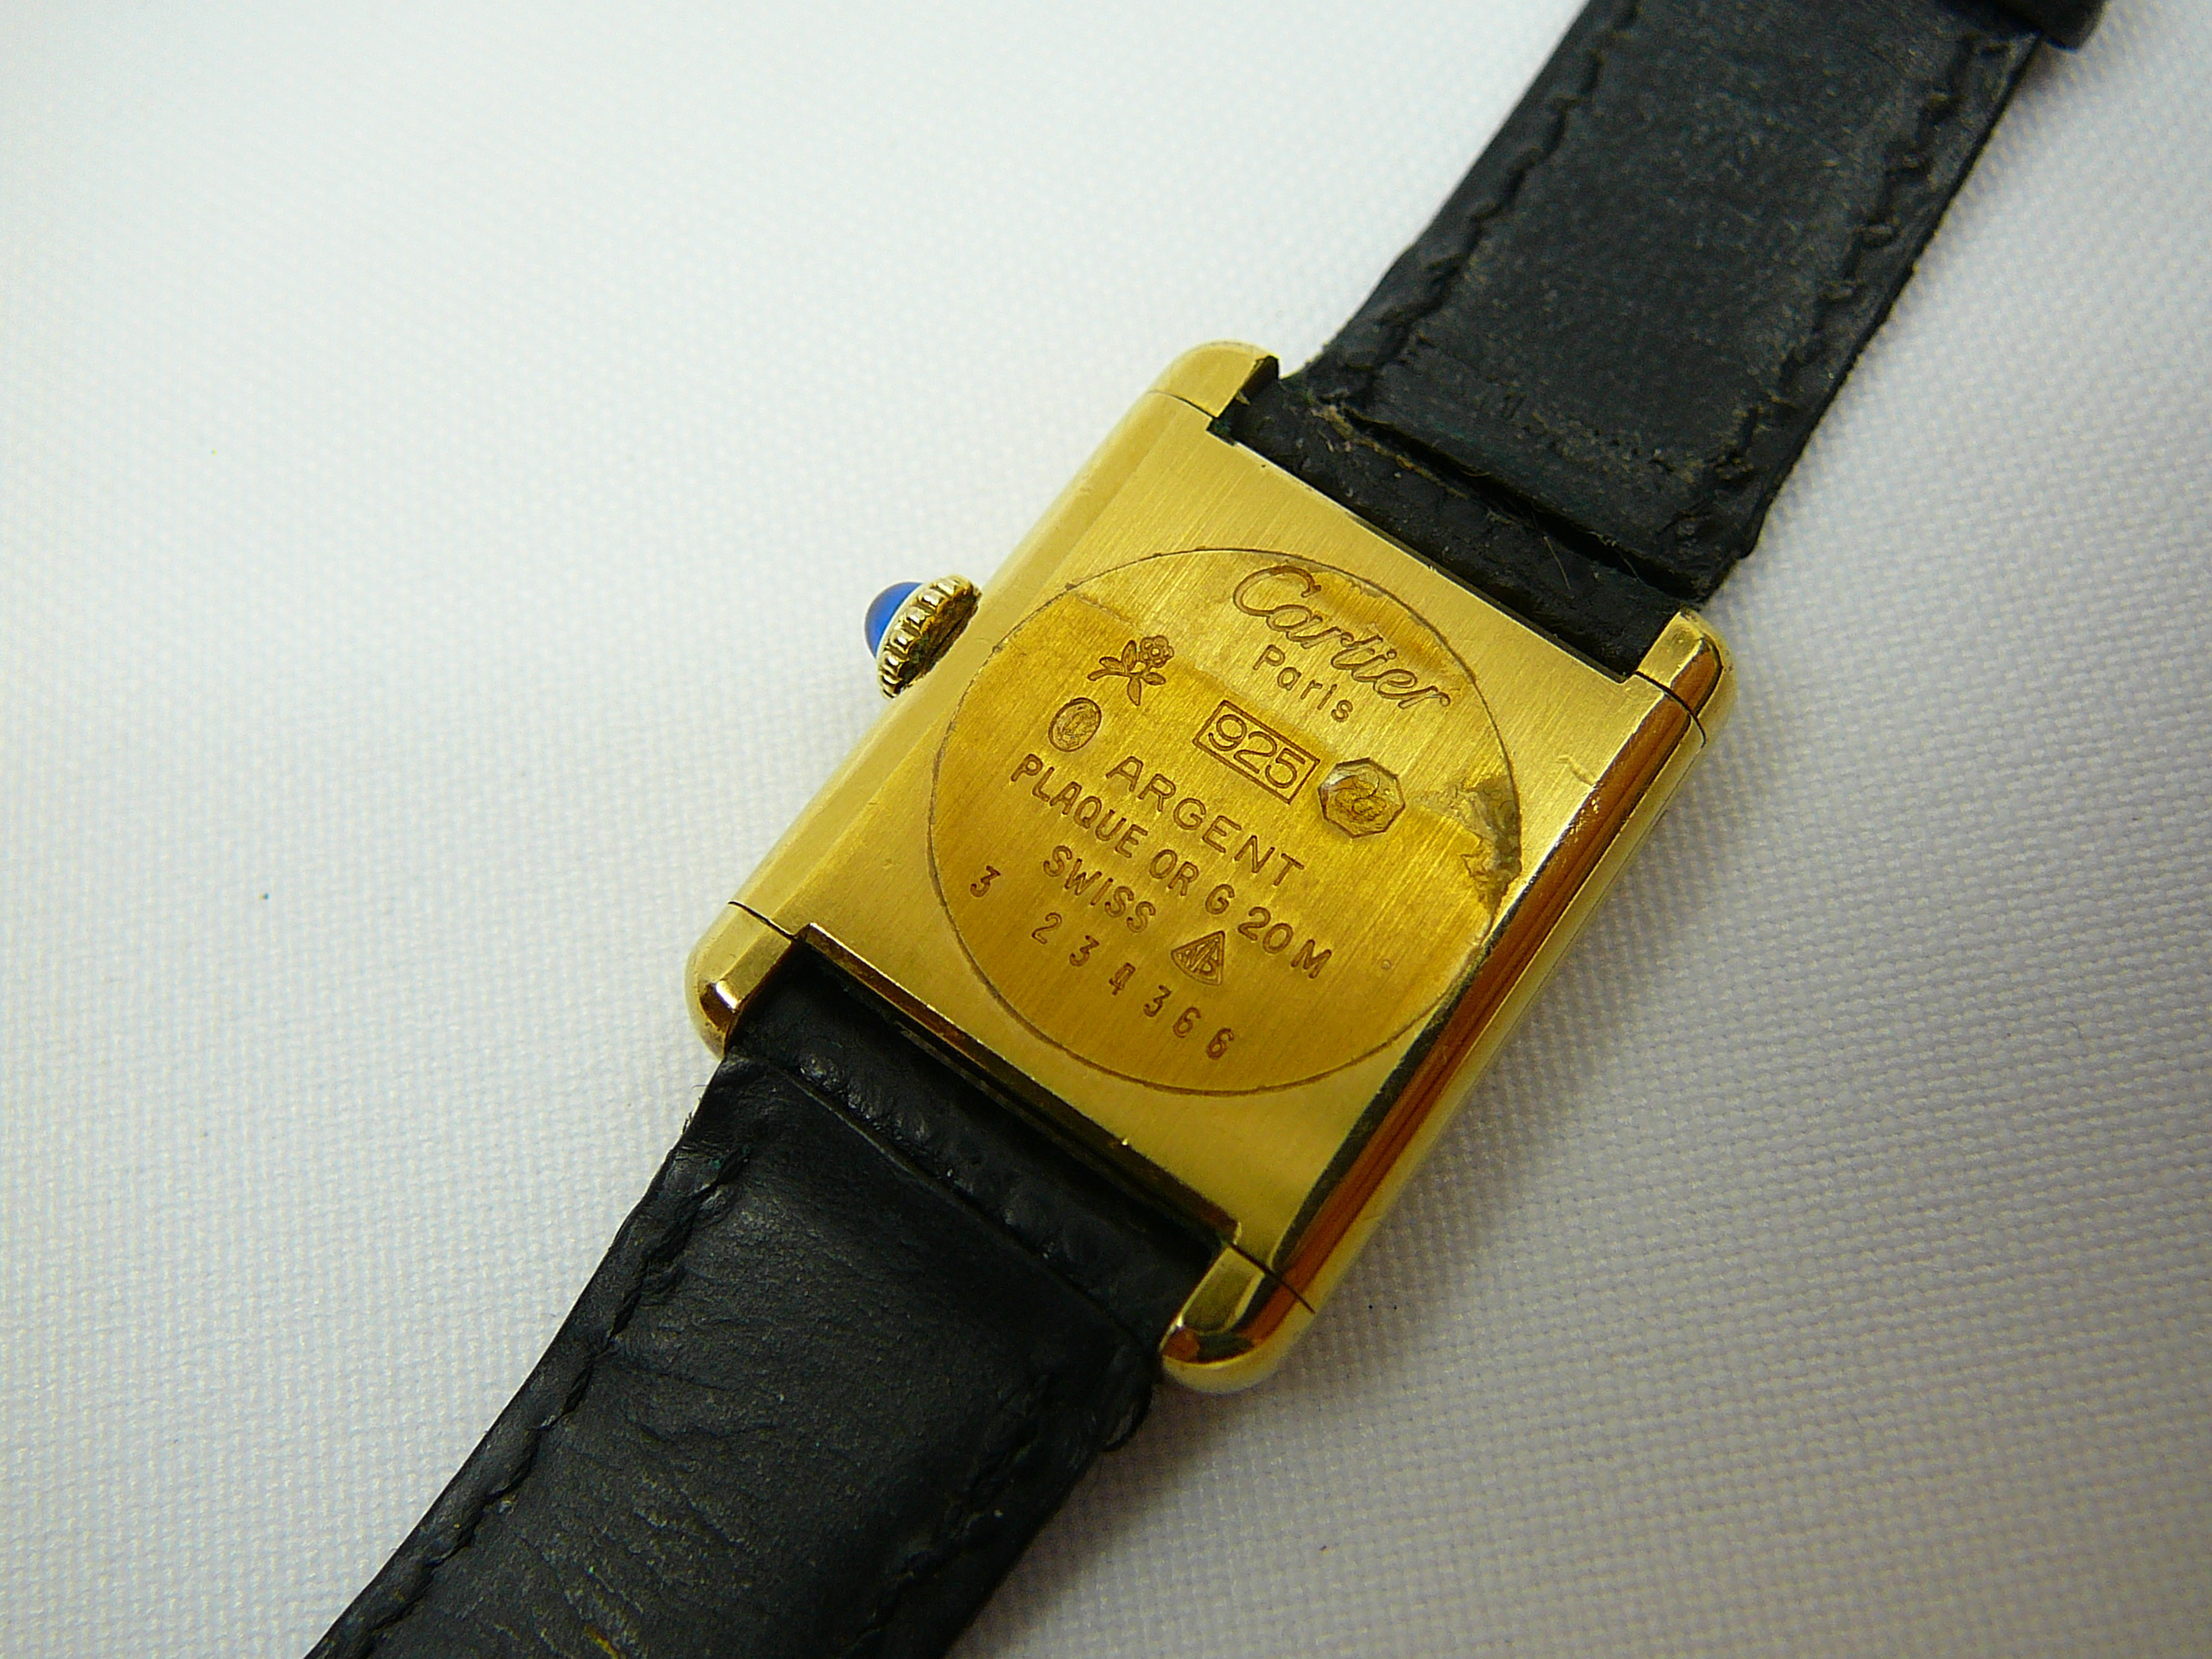 Ladies Cartier Wrist Watch - Image 3 of 3